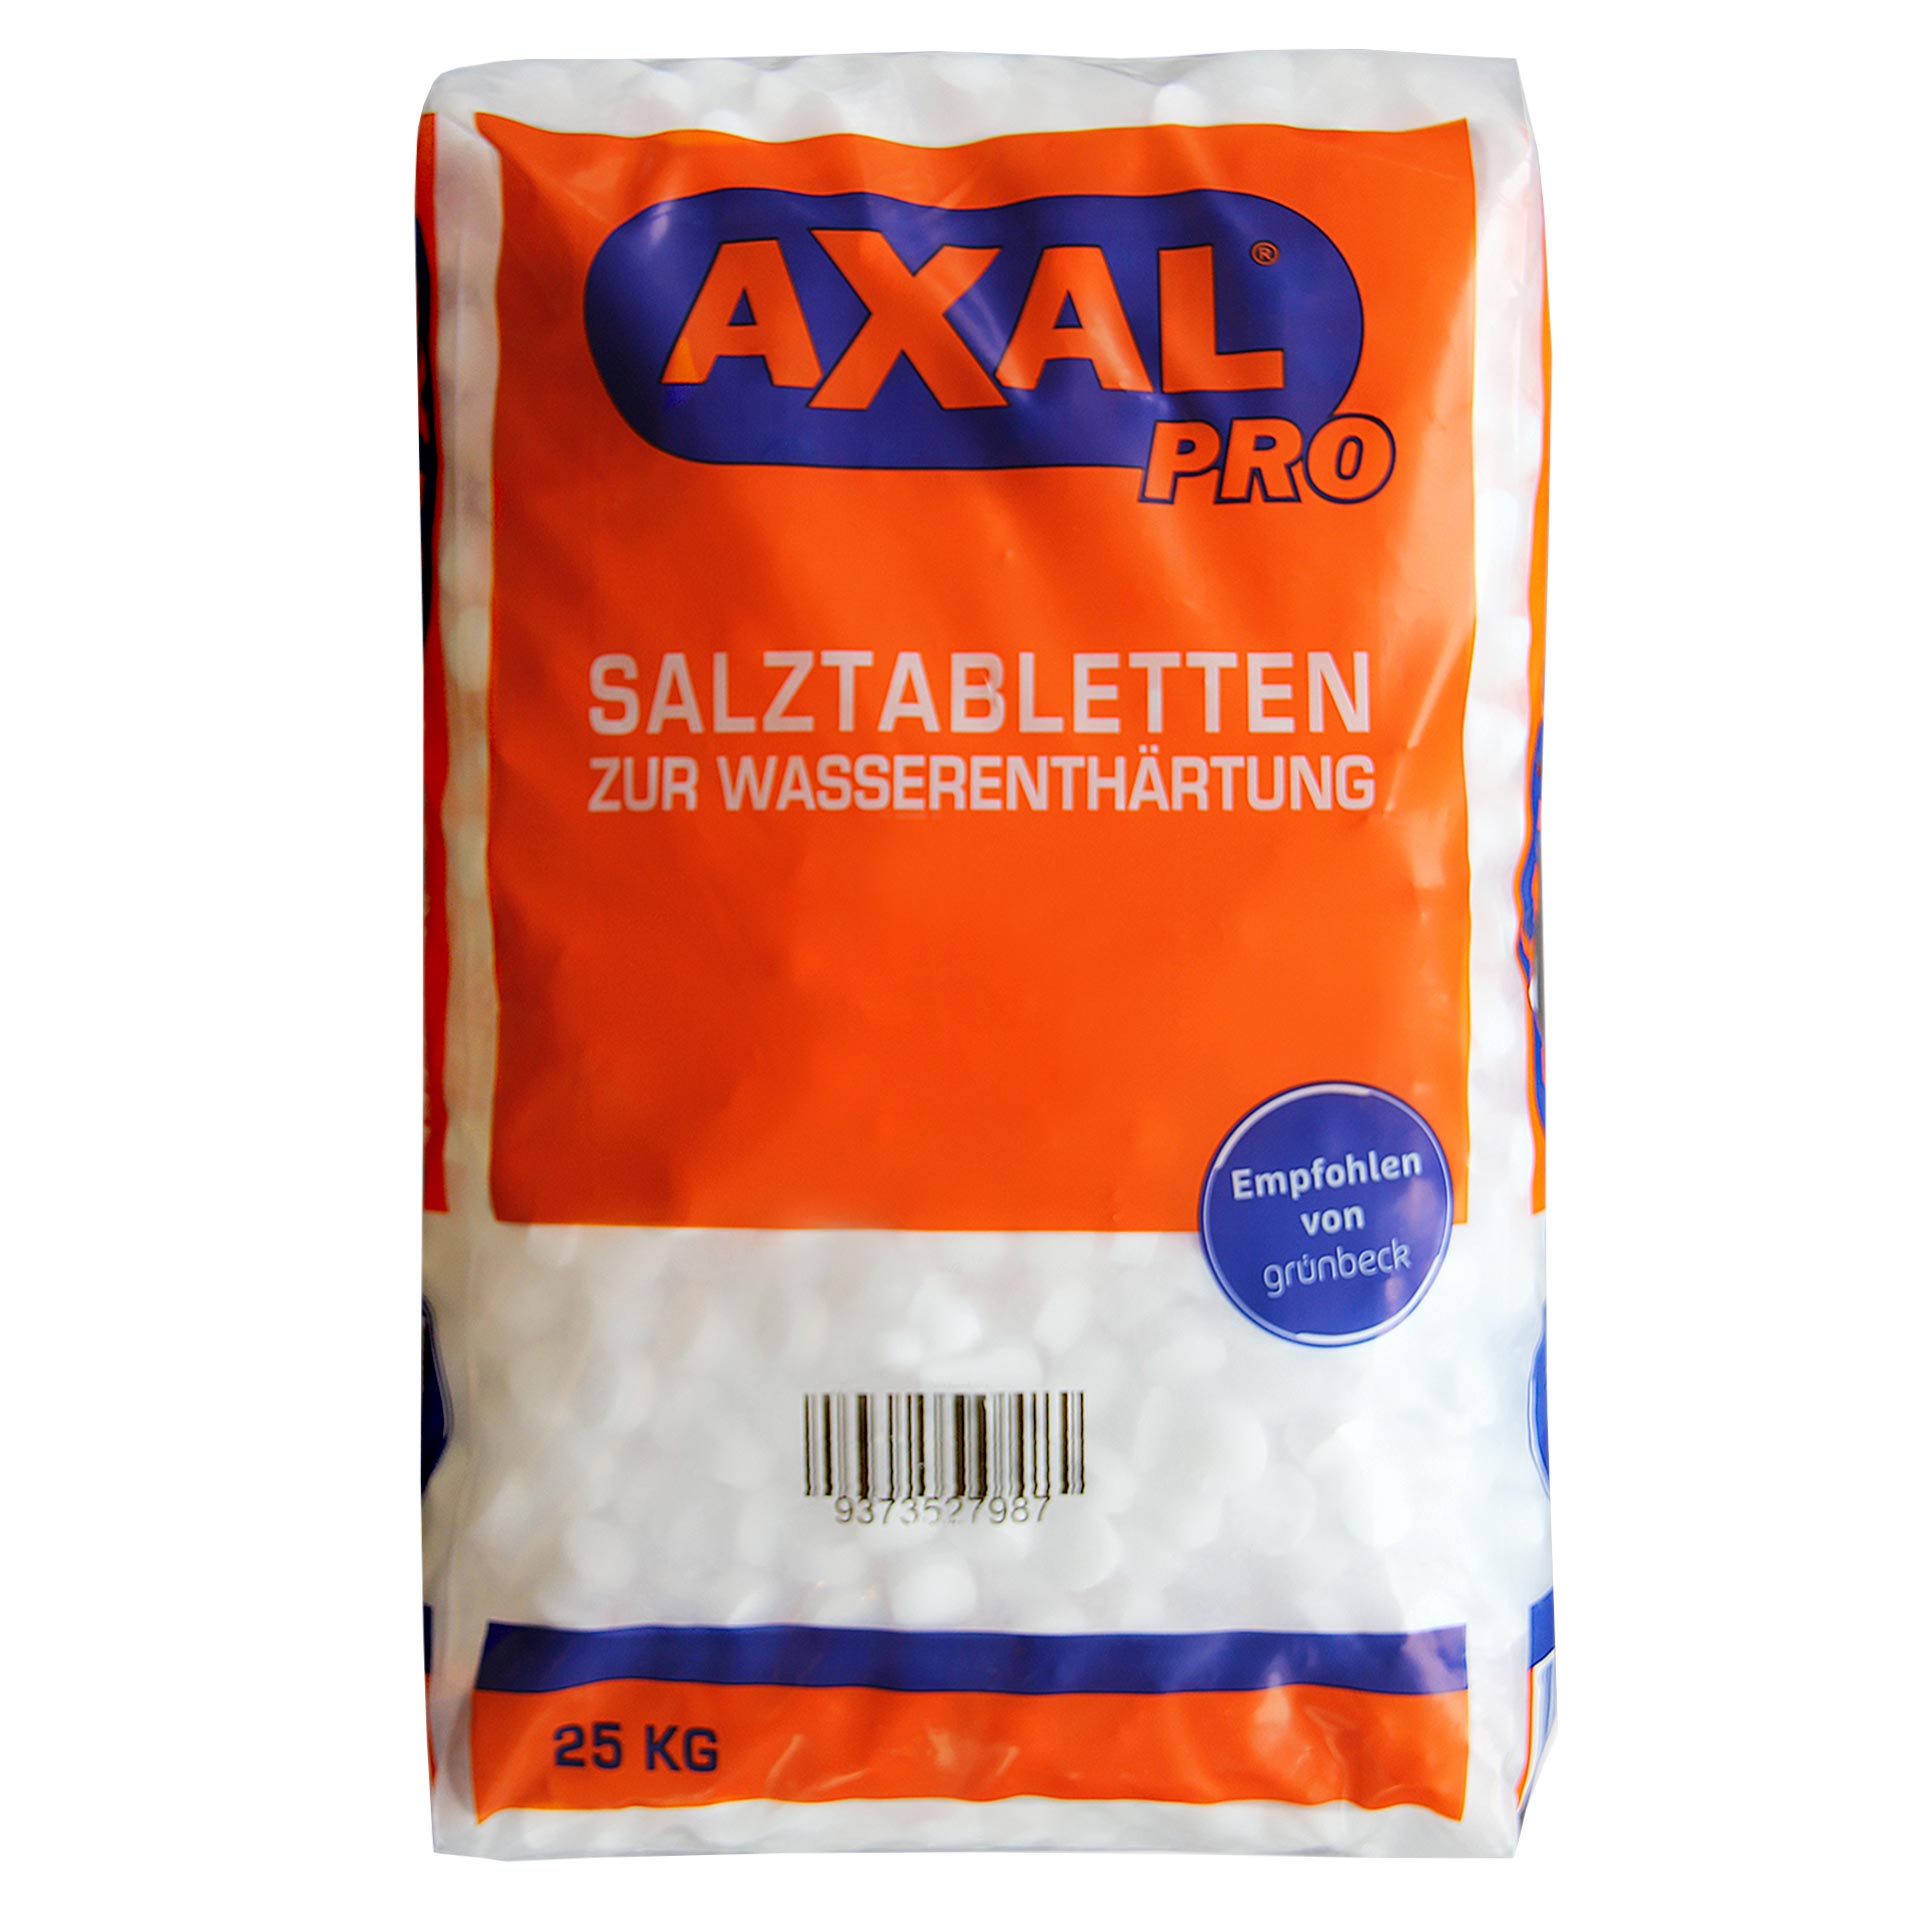 Axal Pro 25 kg Salztabletten Regeneriersalz Wasserenthärter